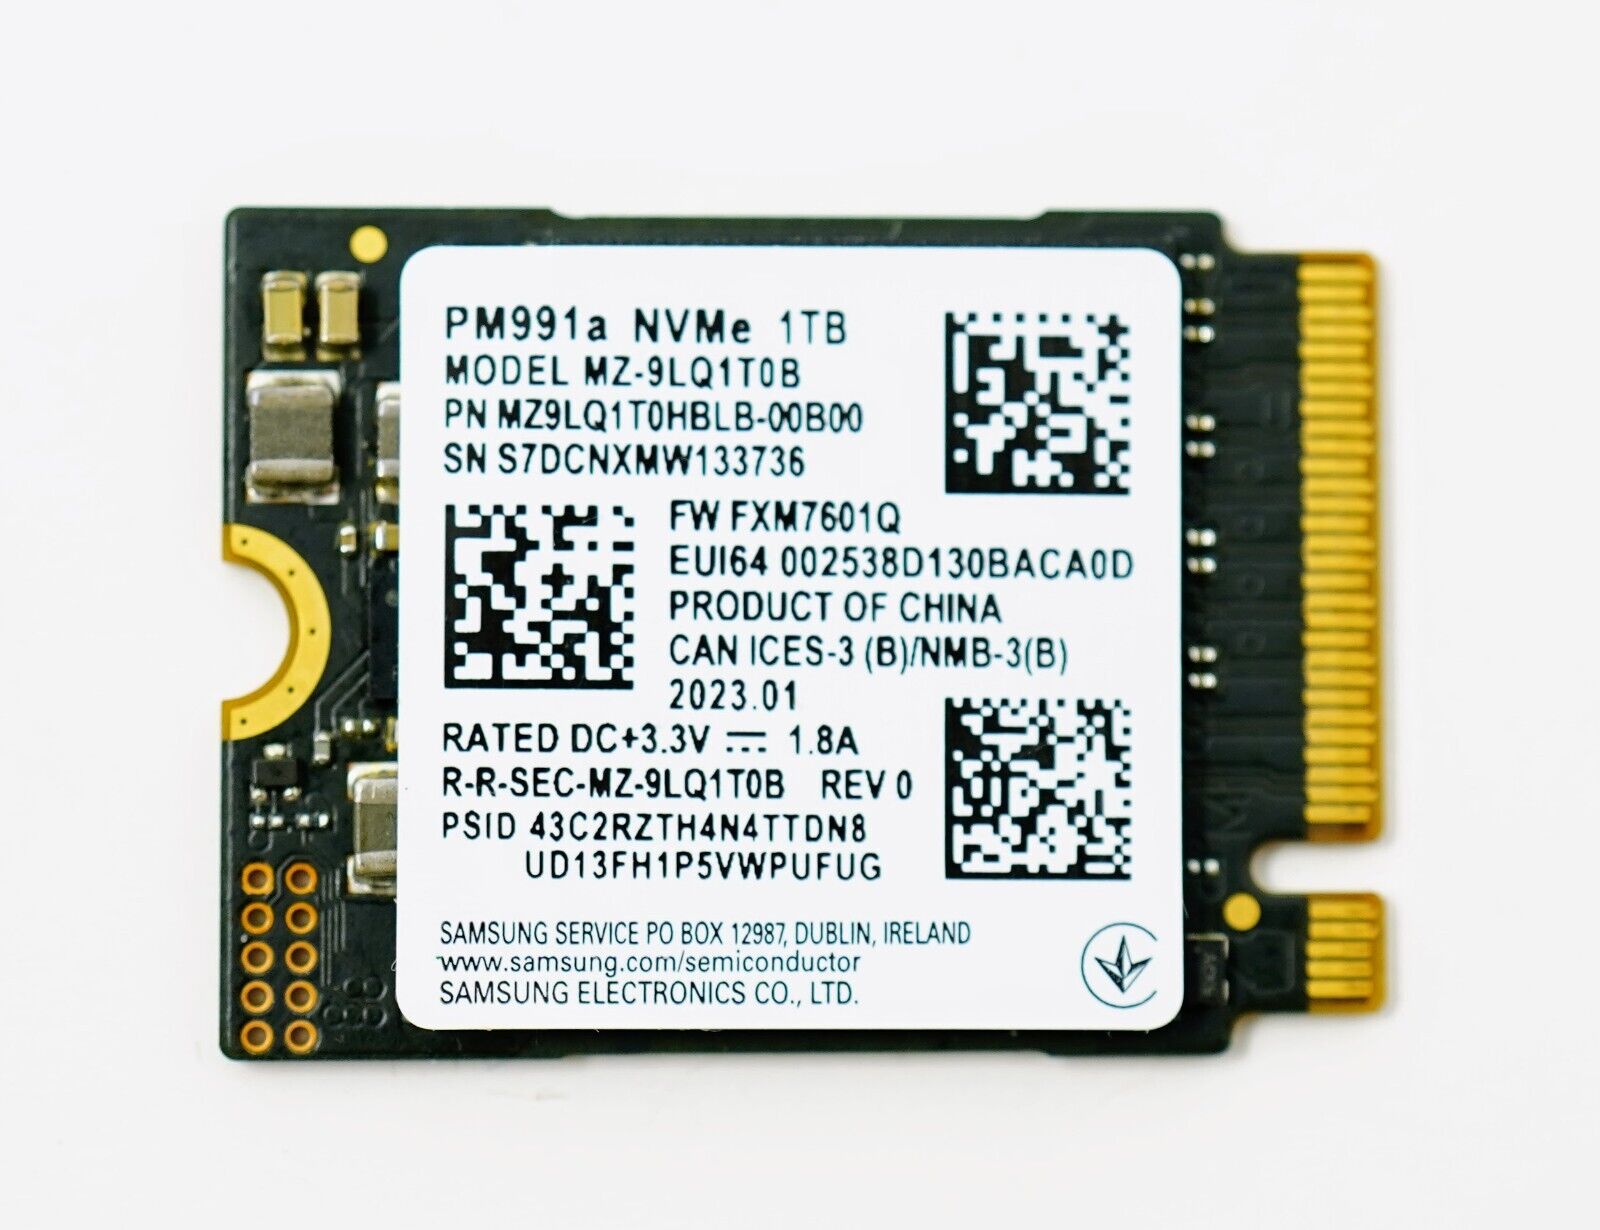 Samsung PM991a 1TB 2230 M.2 NVMe PCIe Gen 3x4 SSD Solid State MZVLQ1T0HBLB